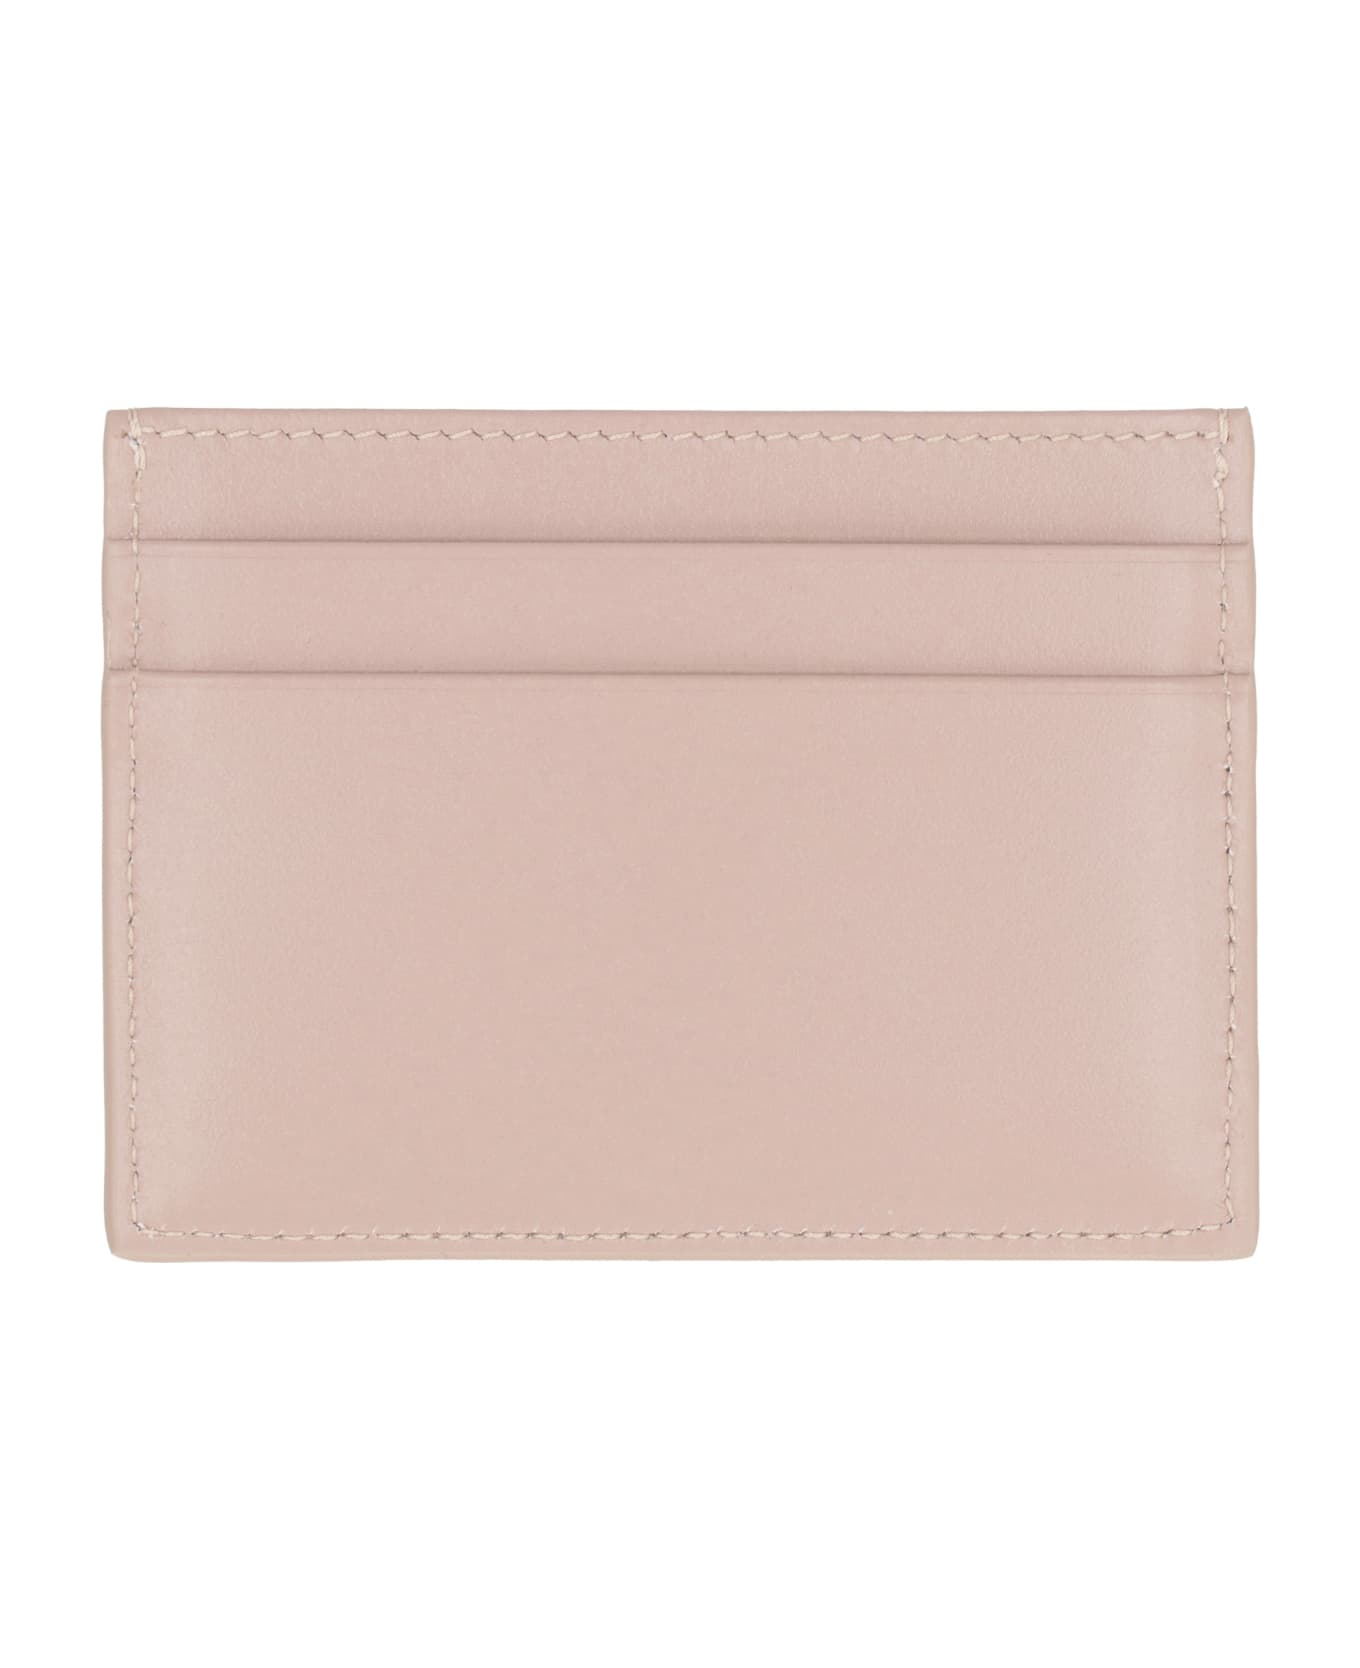 Dolce & Gabbana Logo Detail Leather Card Holder - Pale pink